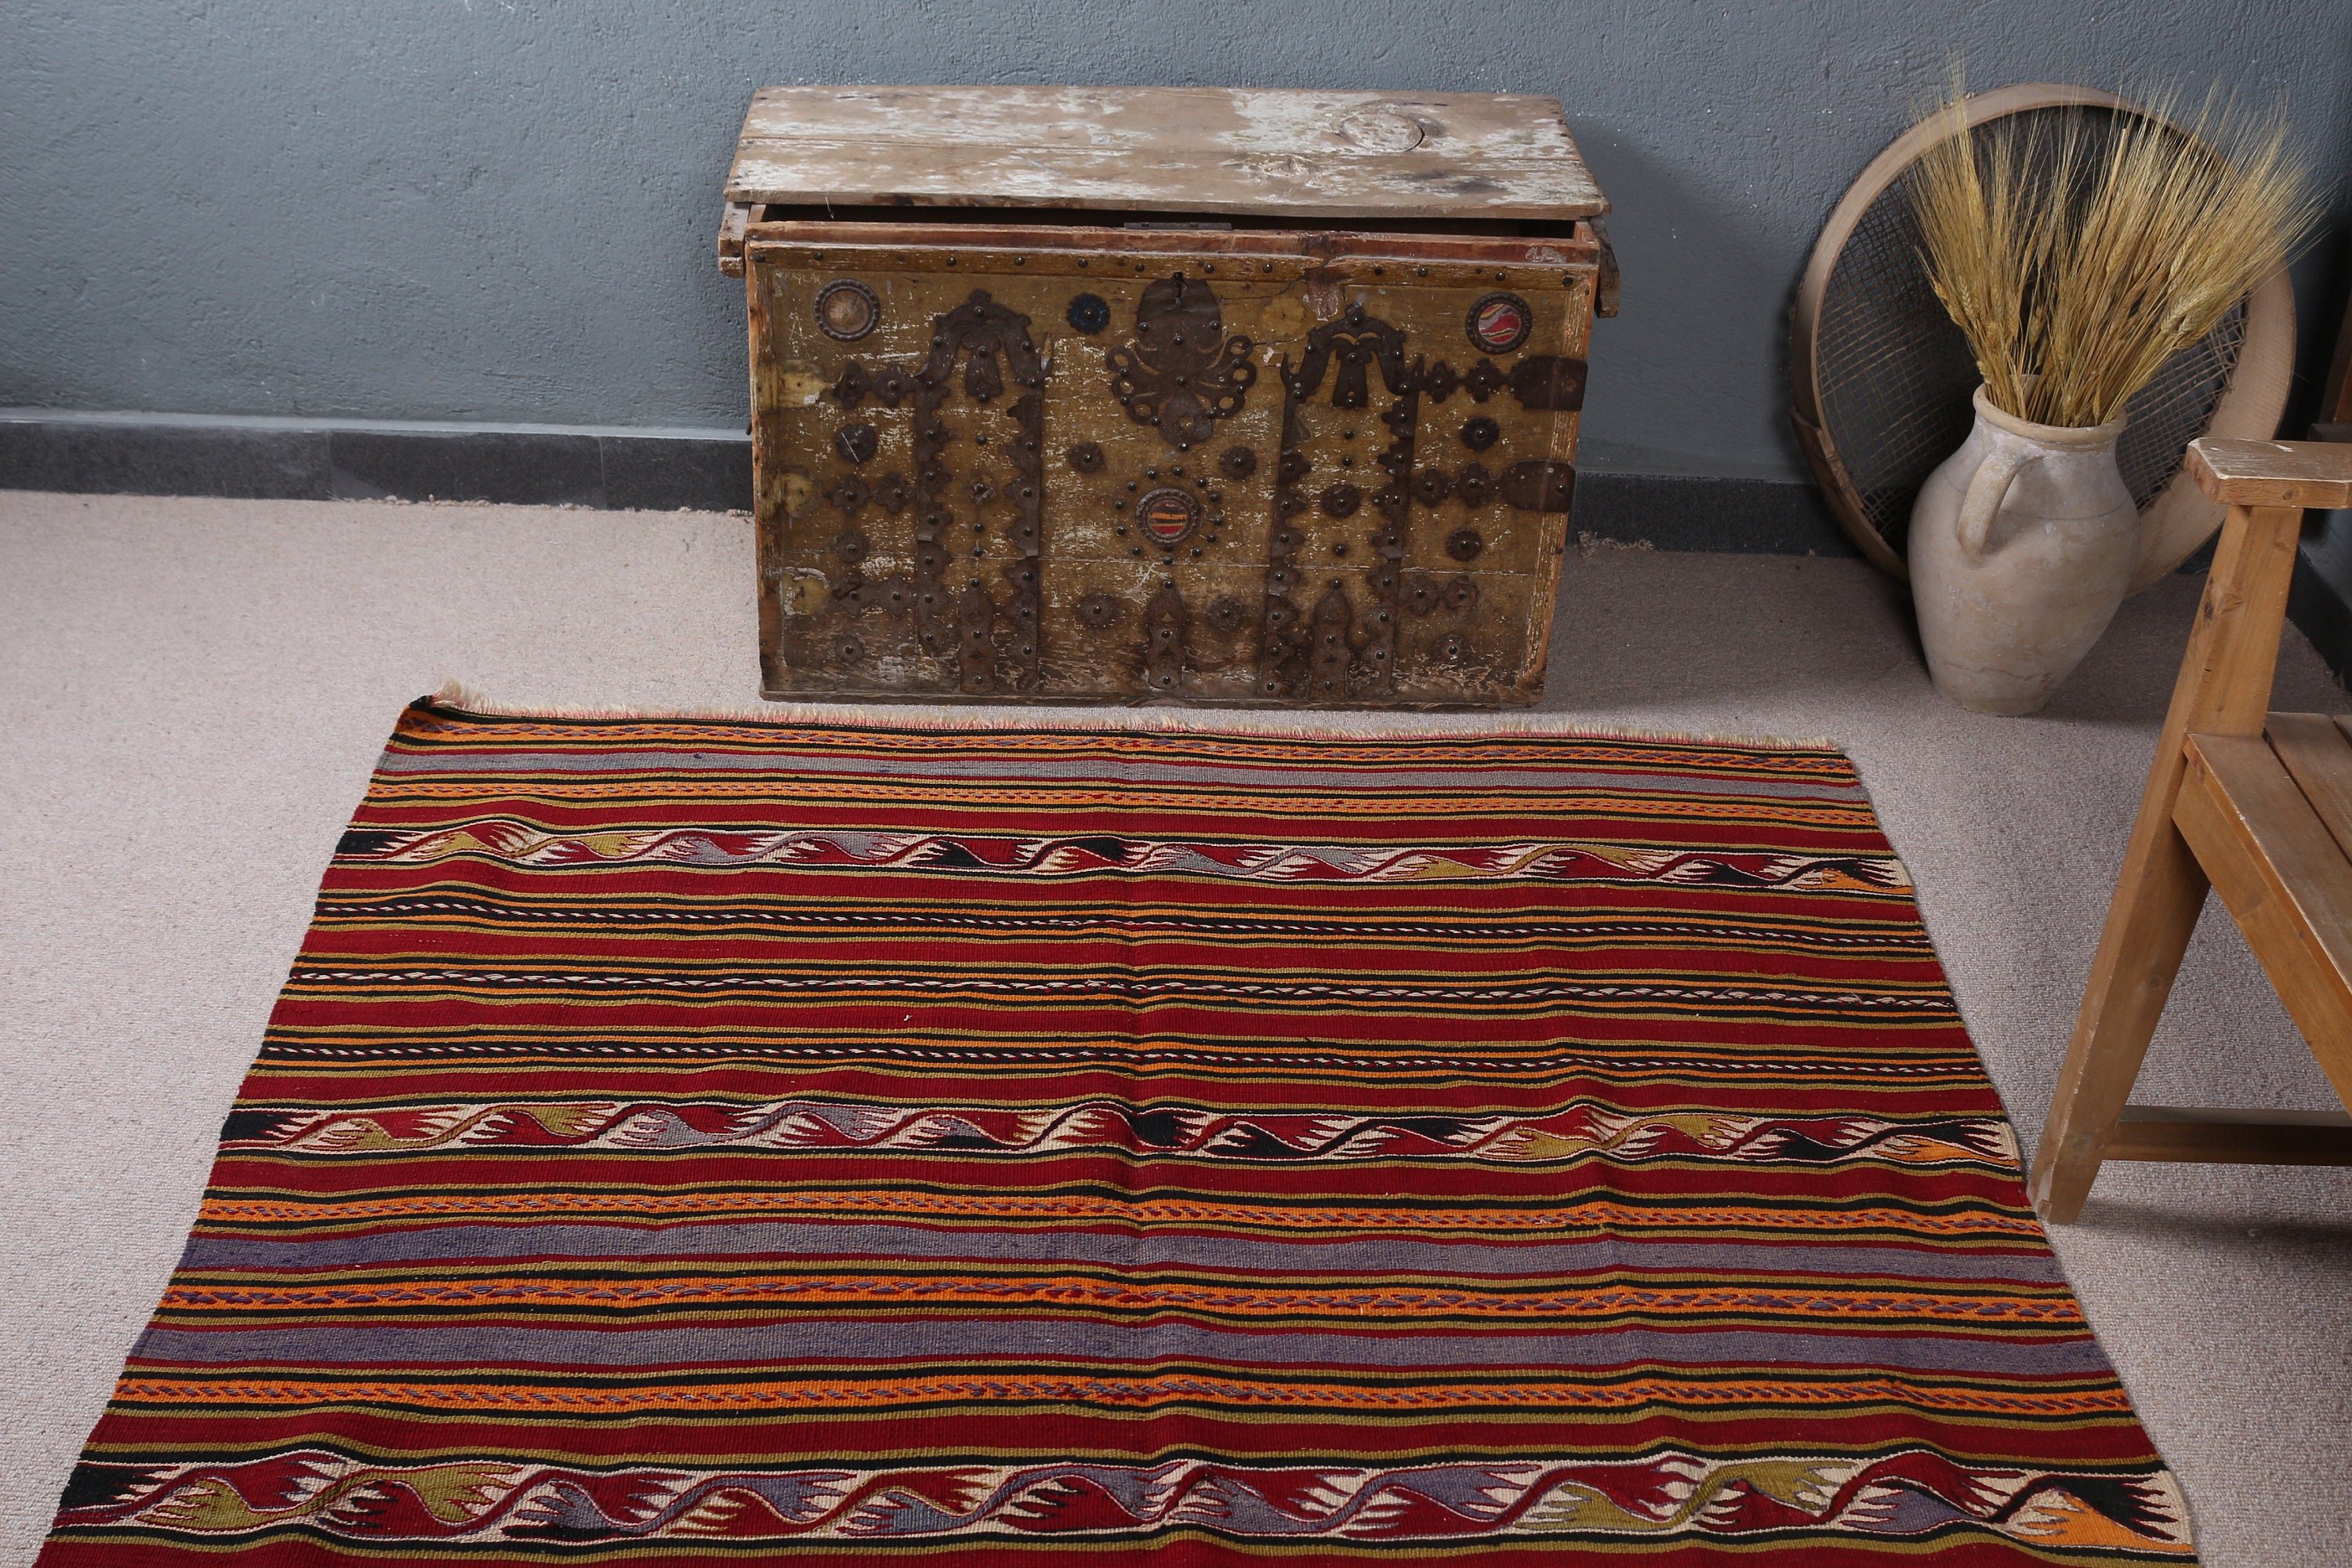 Cute Rugs, Red Cool Rugs, Living Room Rug, Turkish Rug, Floor Rug, 4.8x5.1 ft Area Rug, Vintage Rugs, Rugs for Kitchen, Kilim, Moroccan Rug